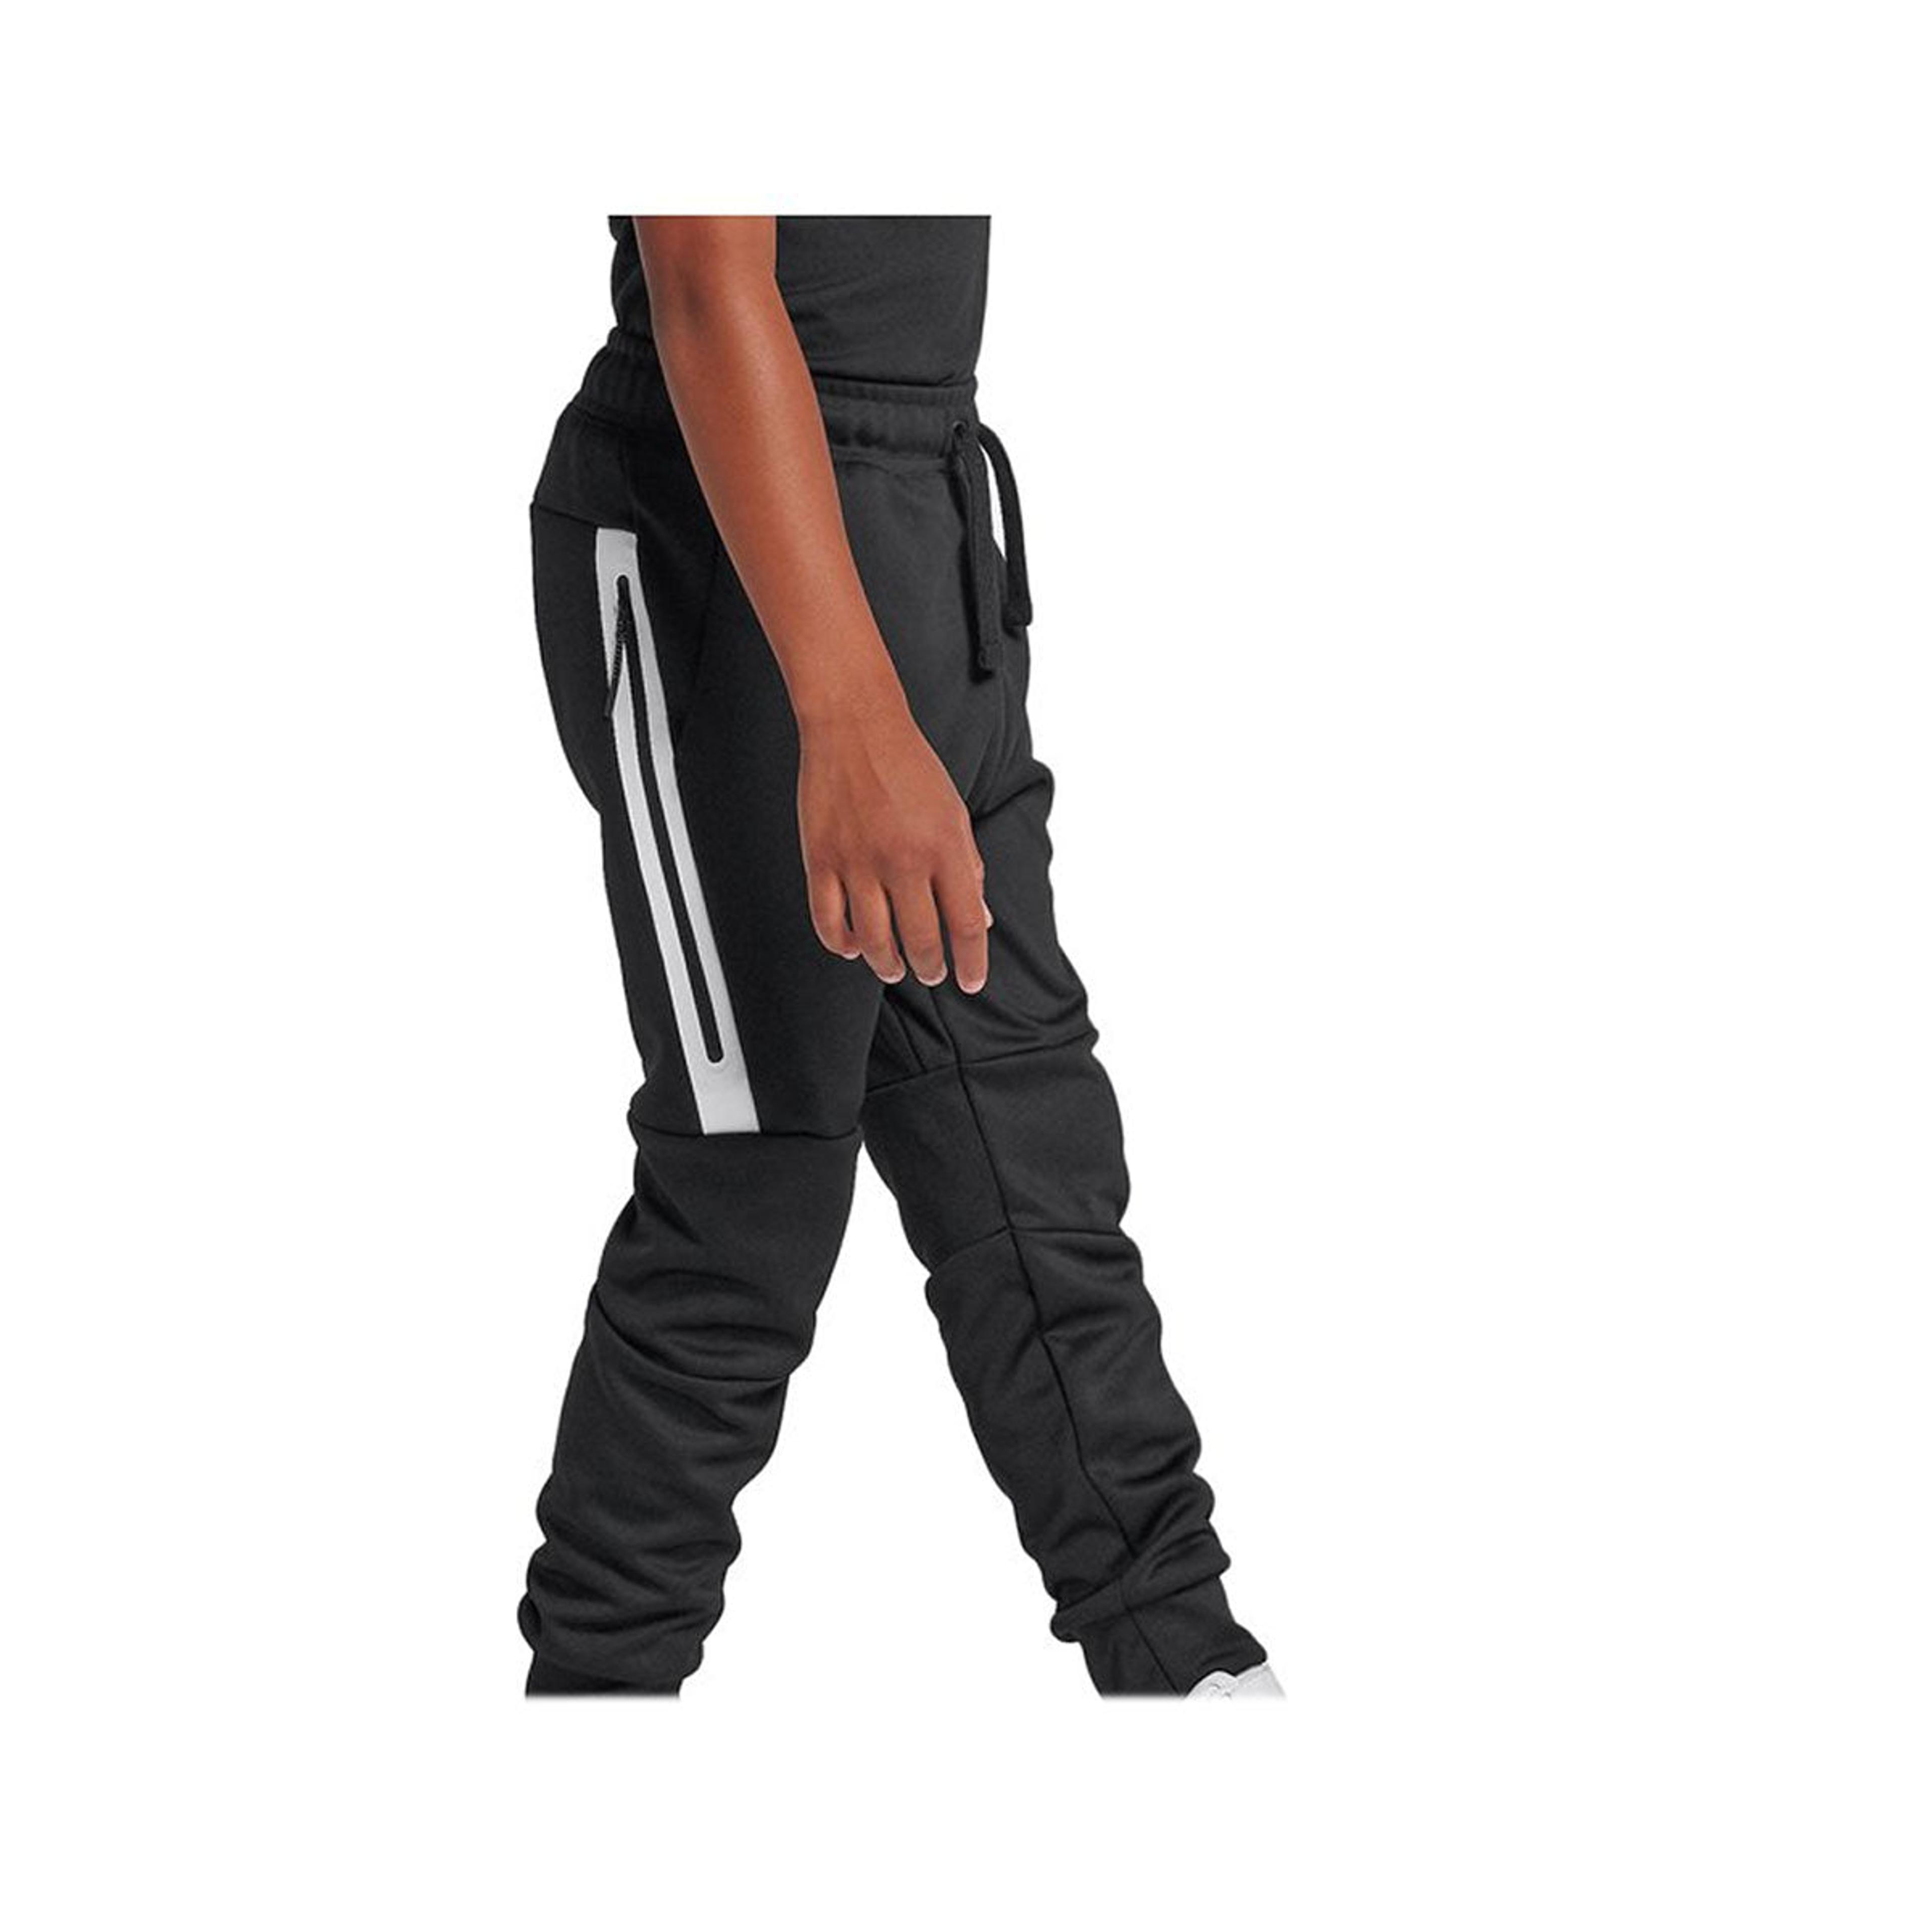 Alternate View 3 of Nike Boy's Tech Fleece Pants Joggers